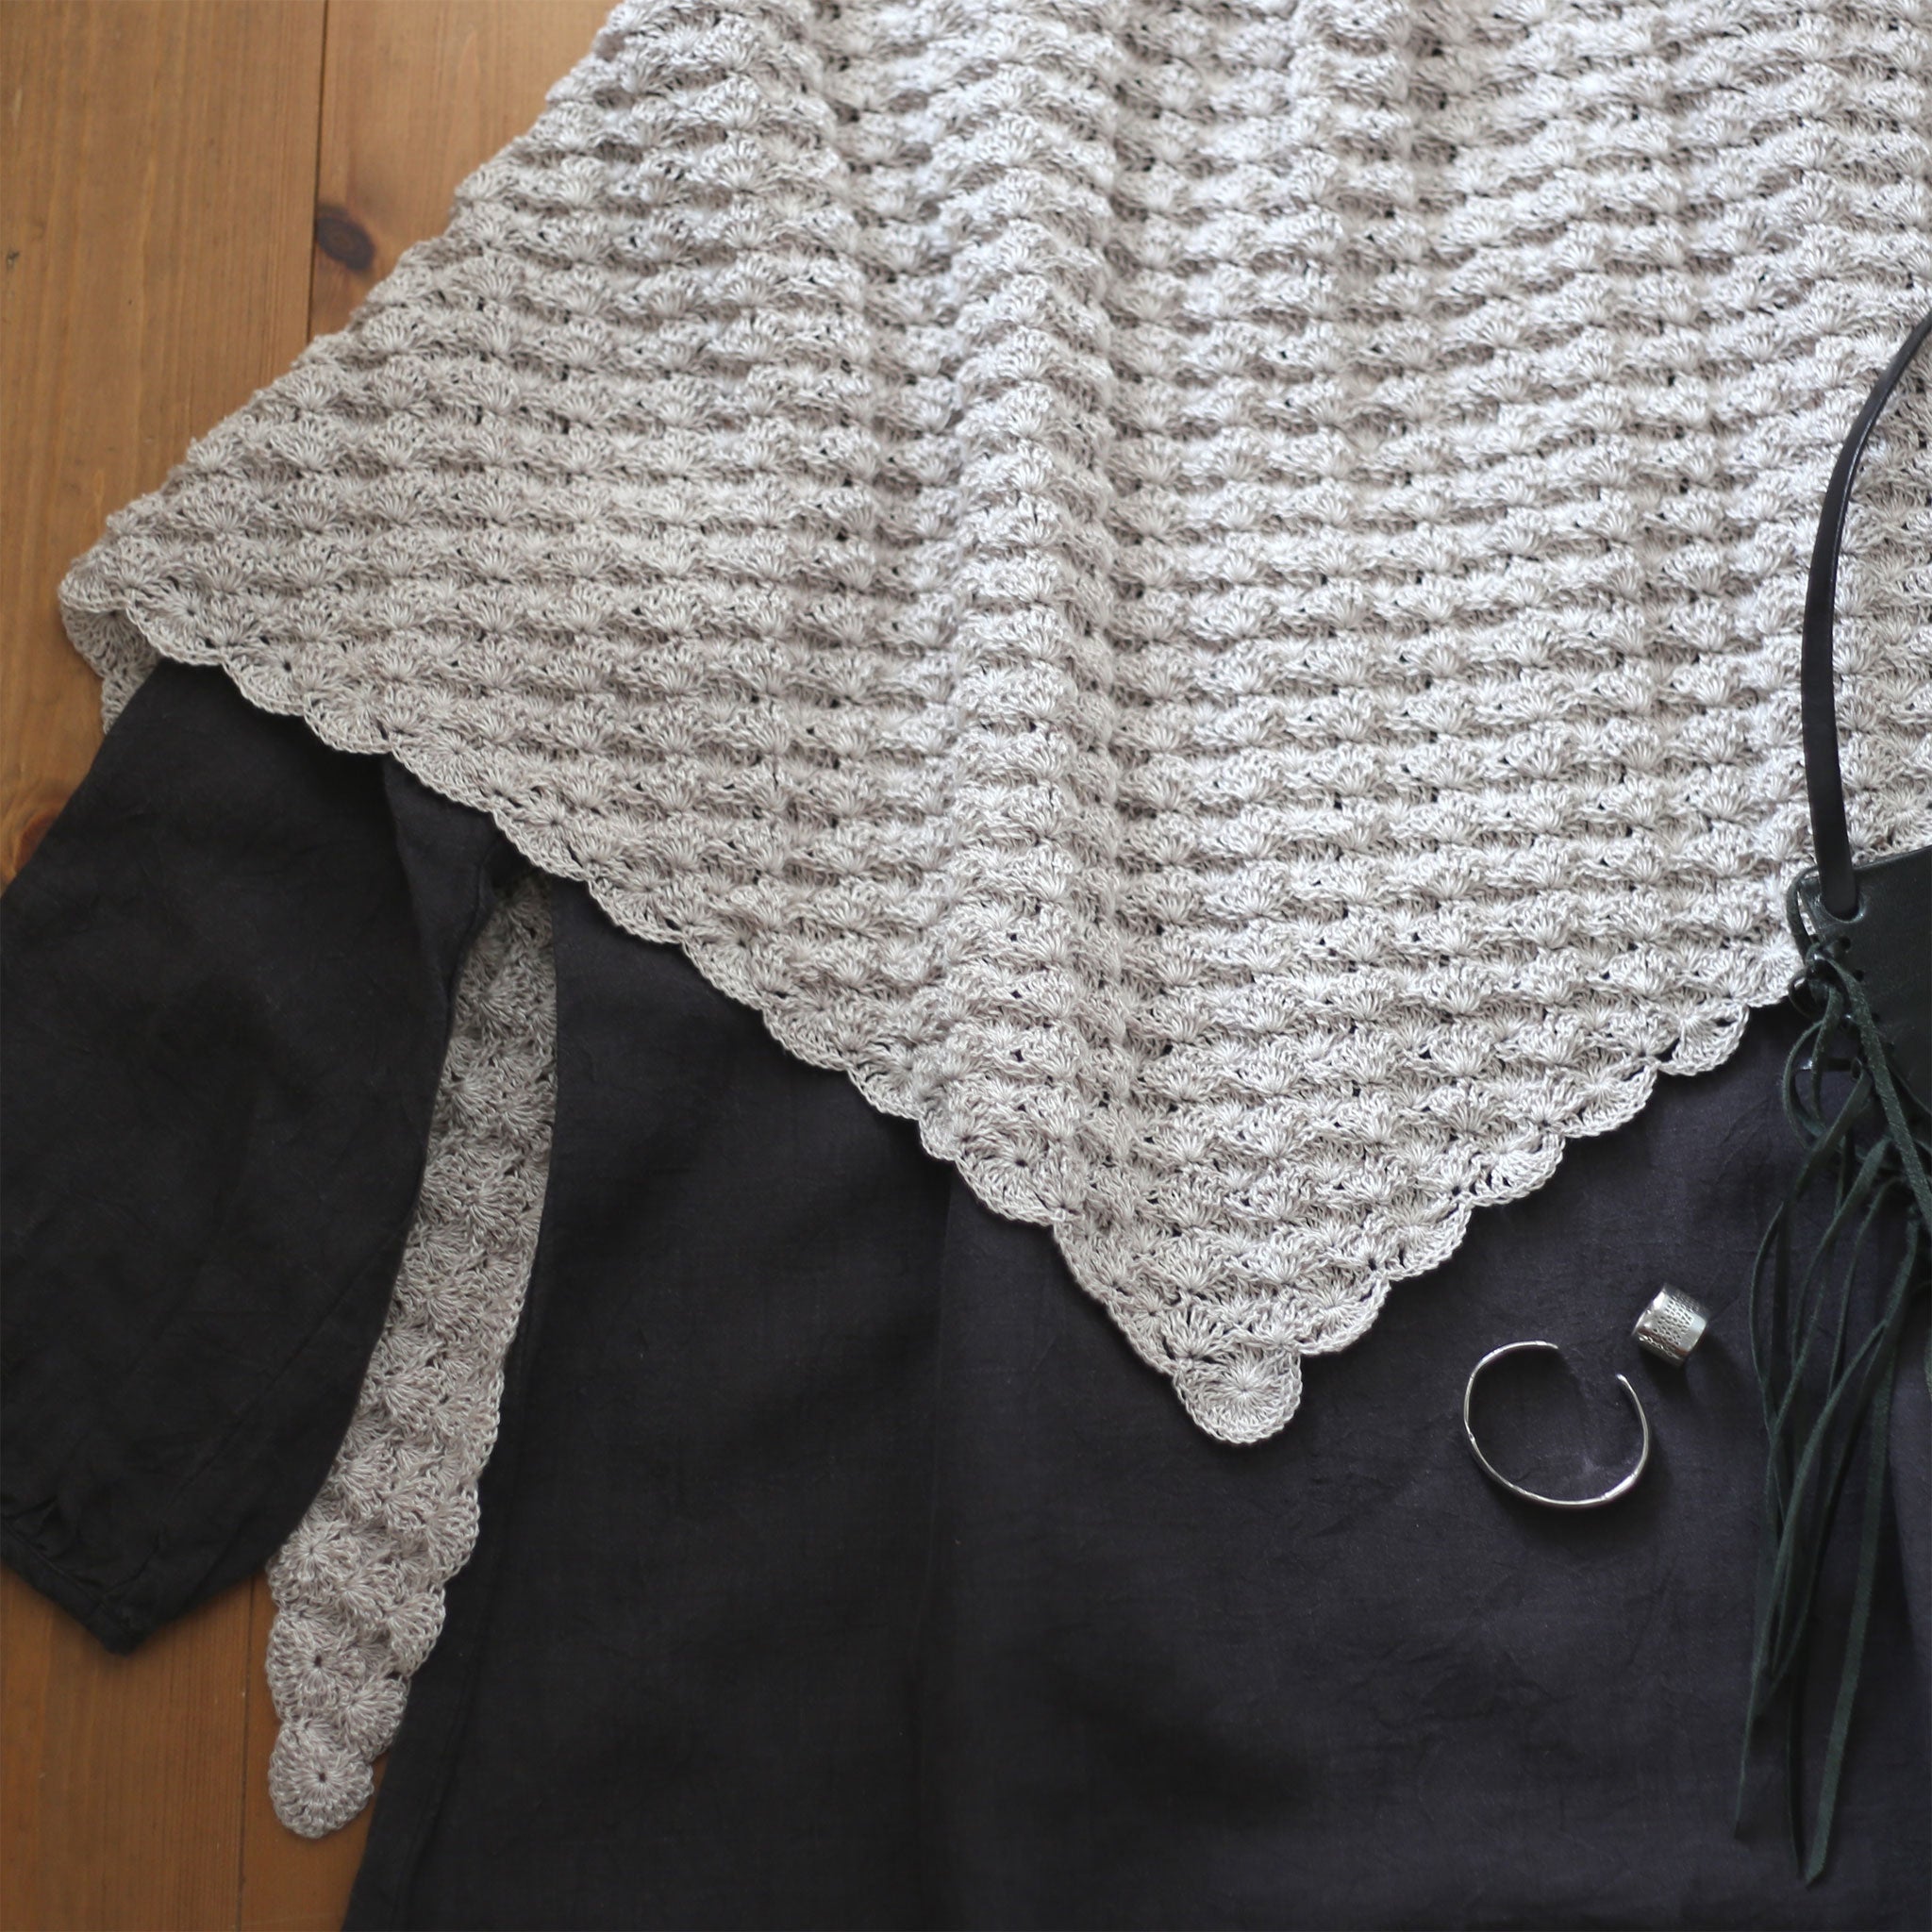 "Lattice shawl" Crochet Pattern